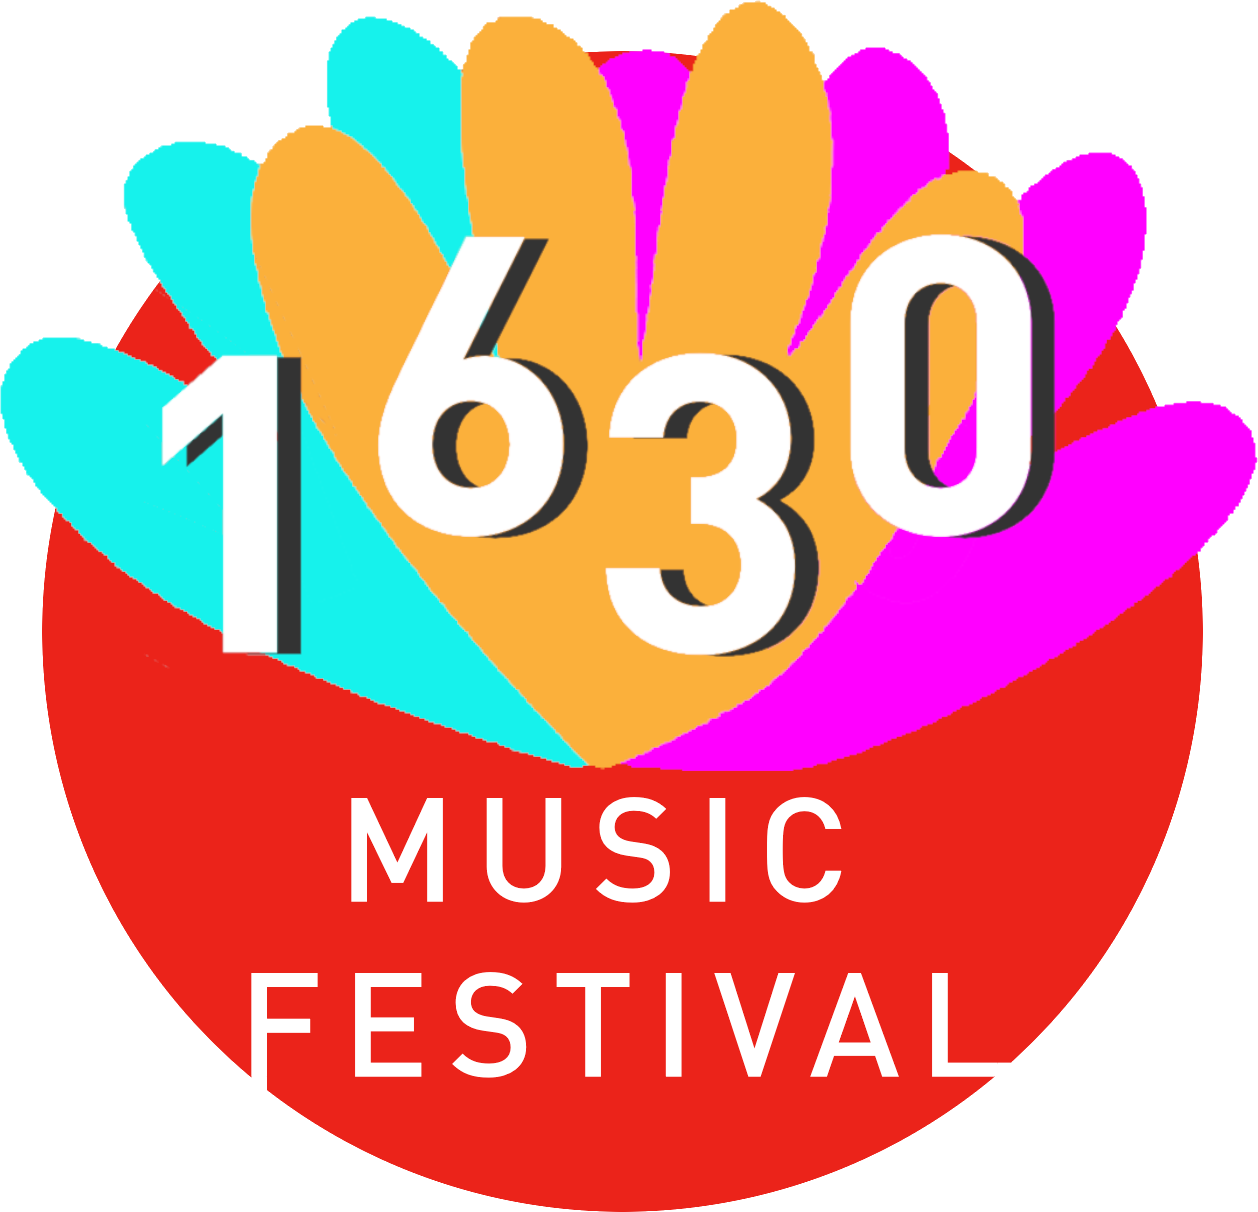 1630 Music Festival - 20-08-2022 @FermeHollekenHoeve Linkebeek